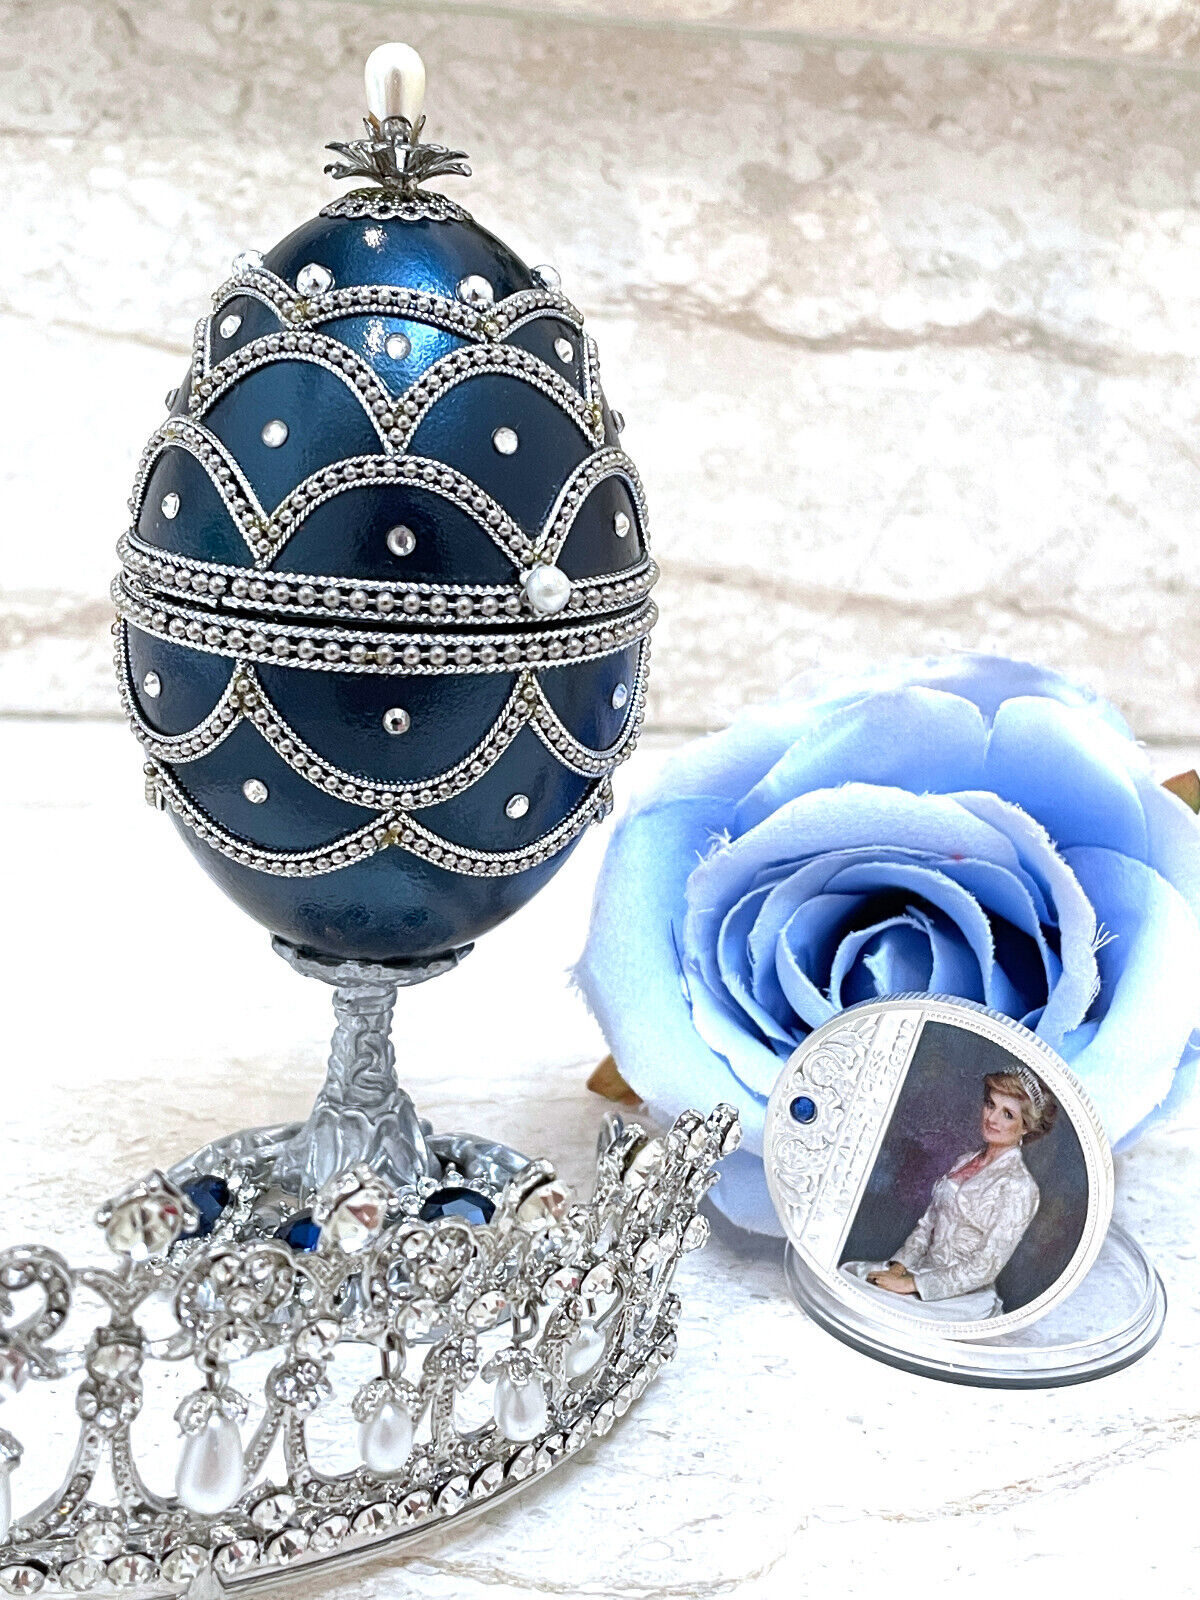 pse 1981 Antique style Fabergé Eggs Royal Blue Faberge egg Royal Collectible egg